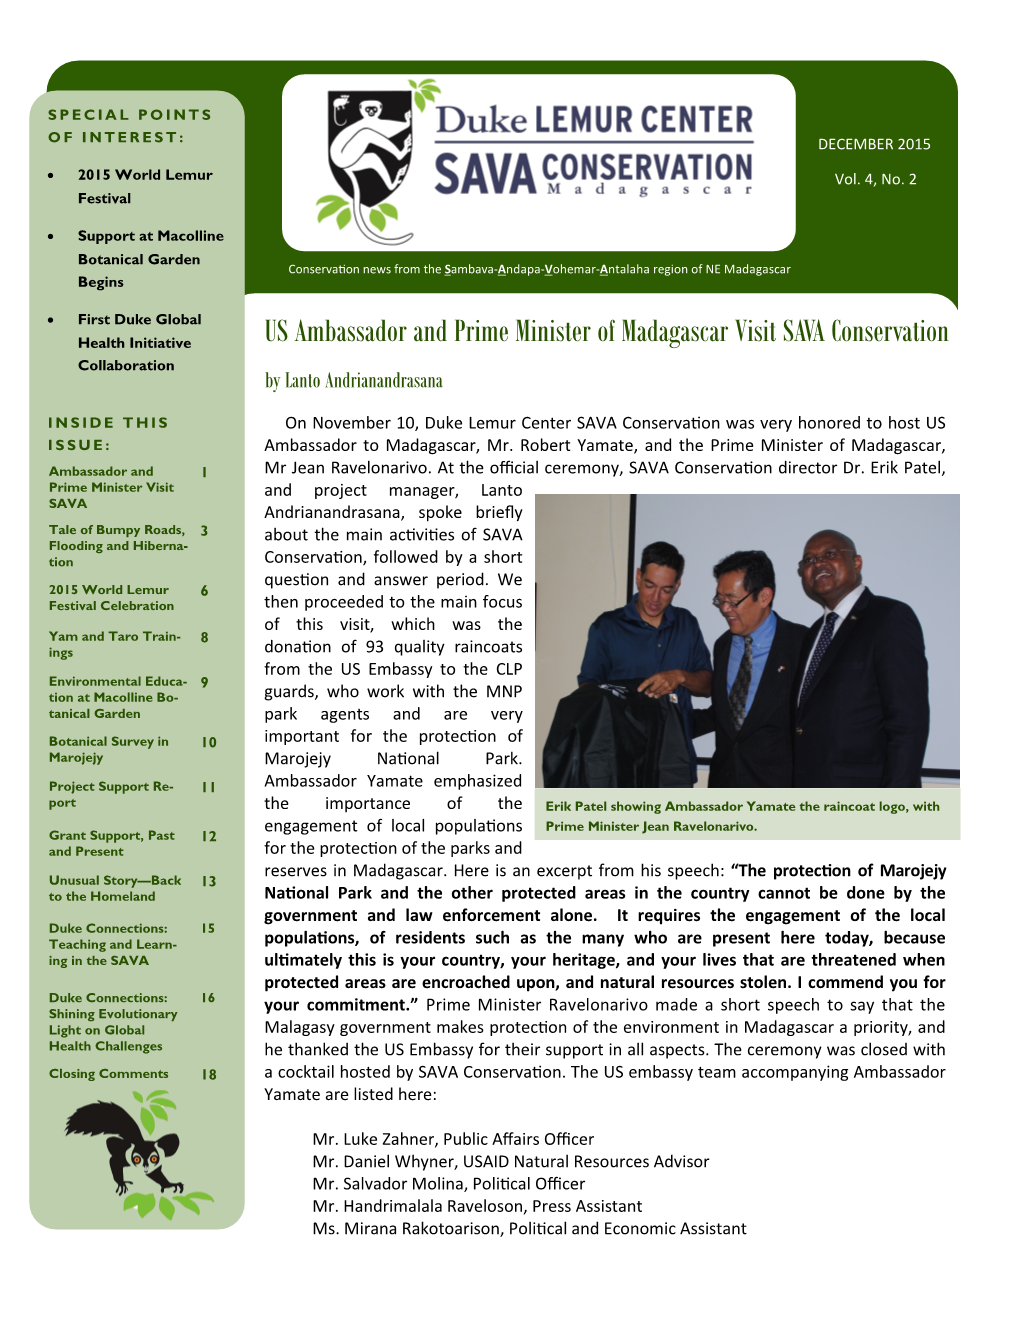 Duke Lemur Center SAVA Conservation Was Very Honored to Host US ISSUE: Ambassador to Madagascar, Mr